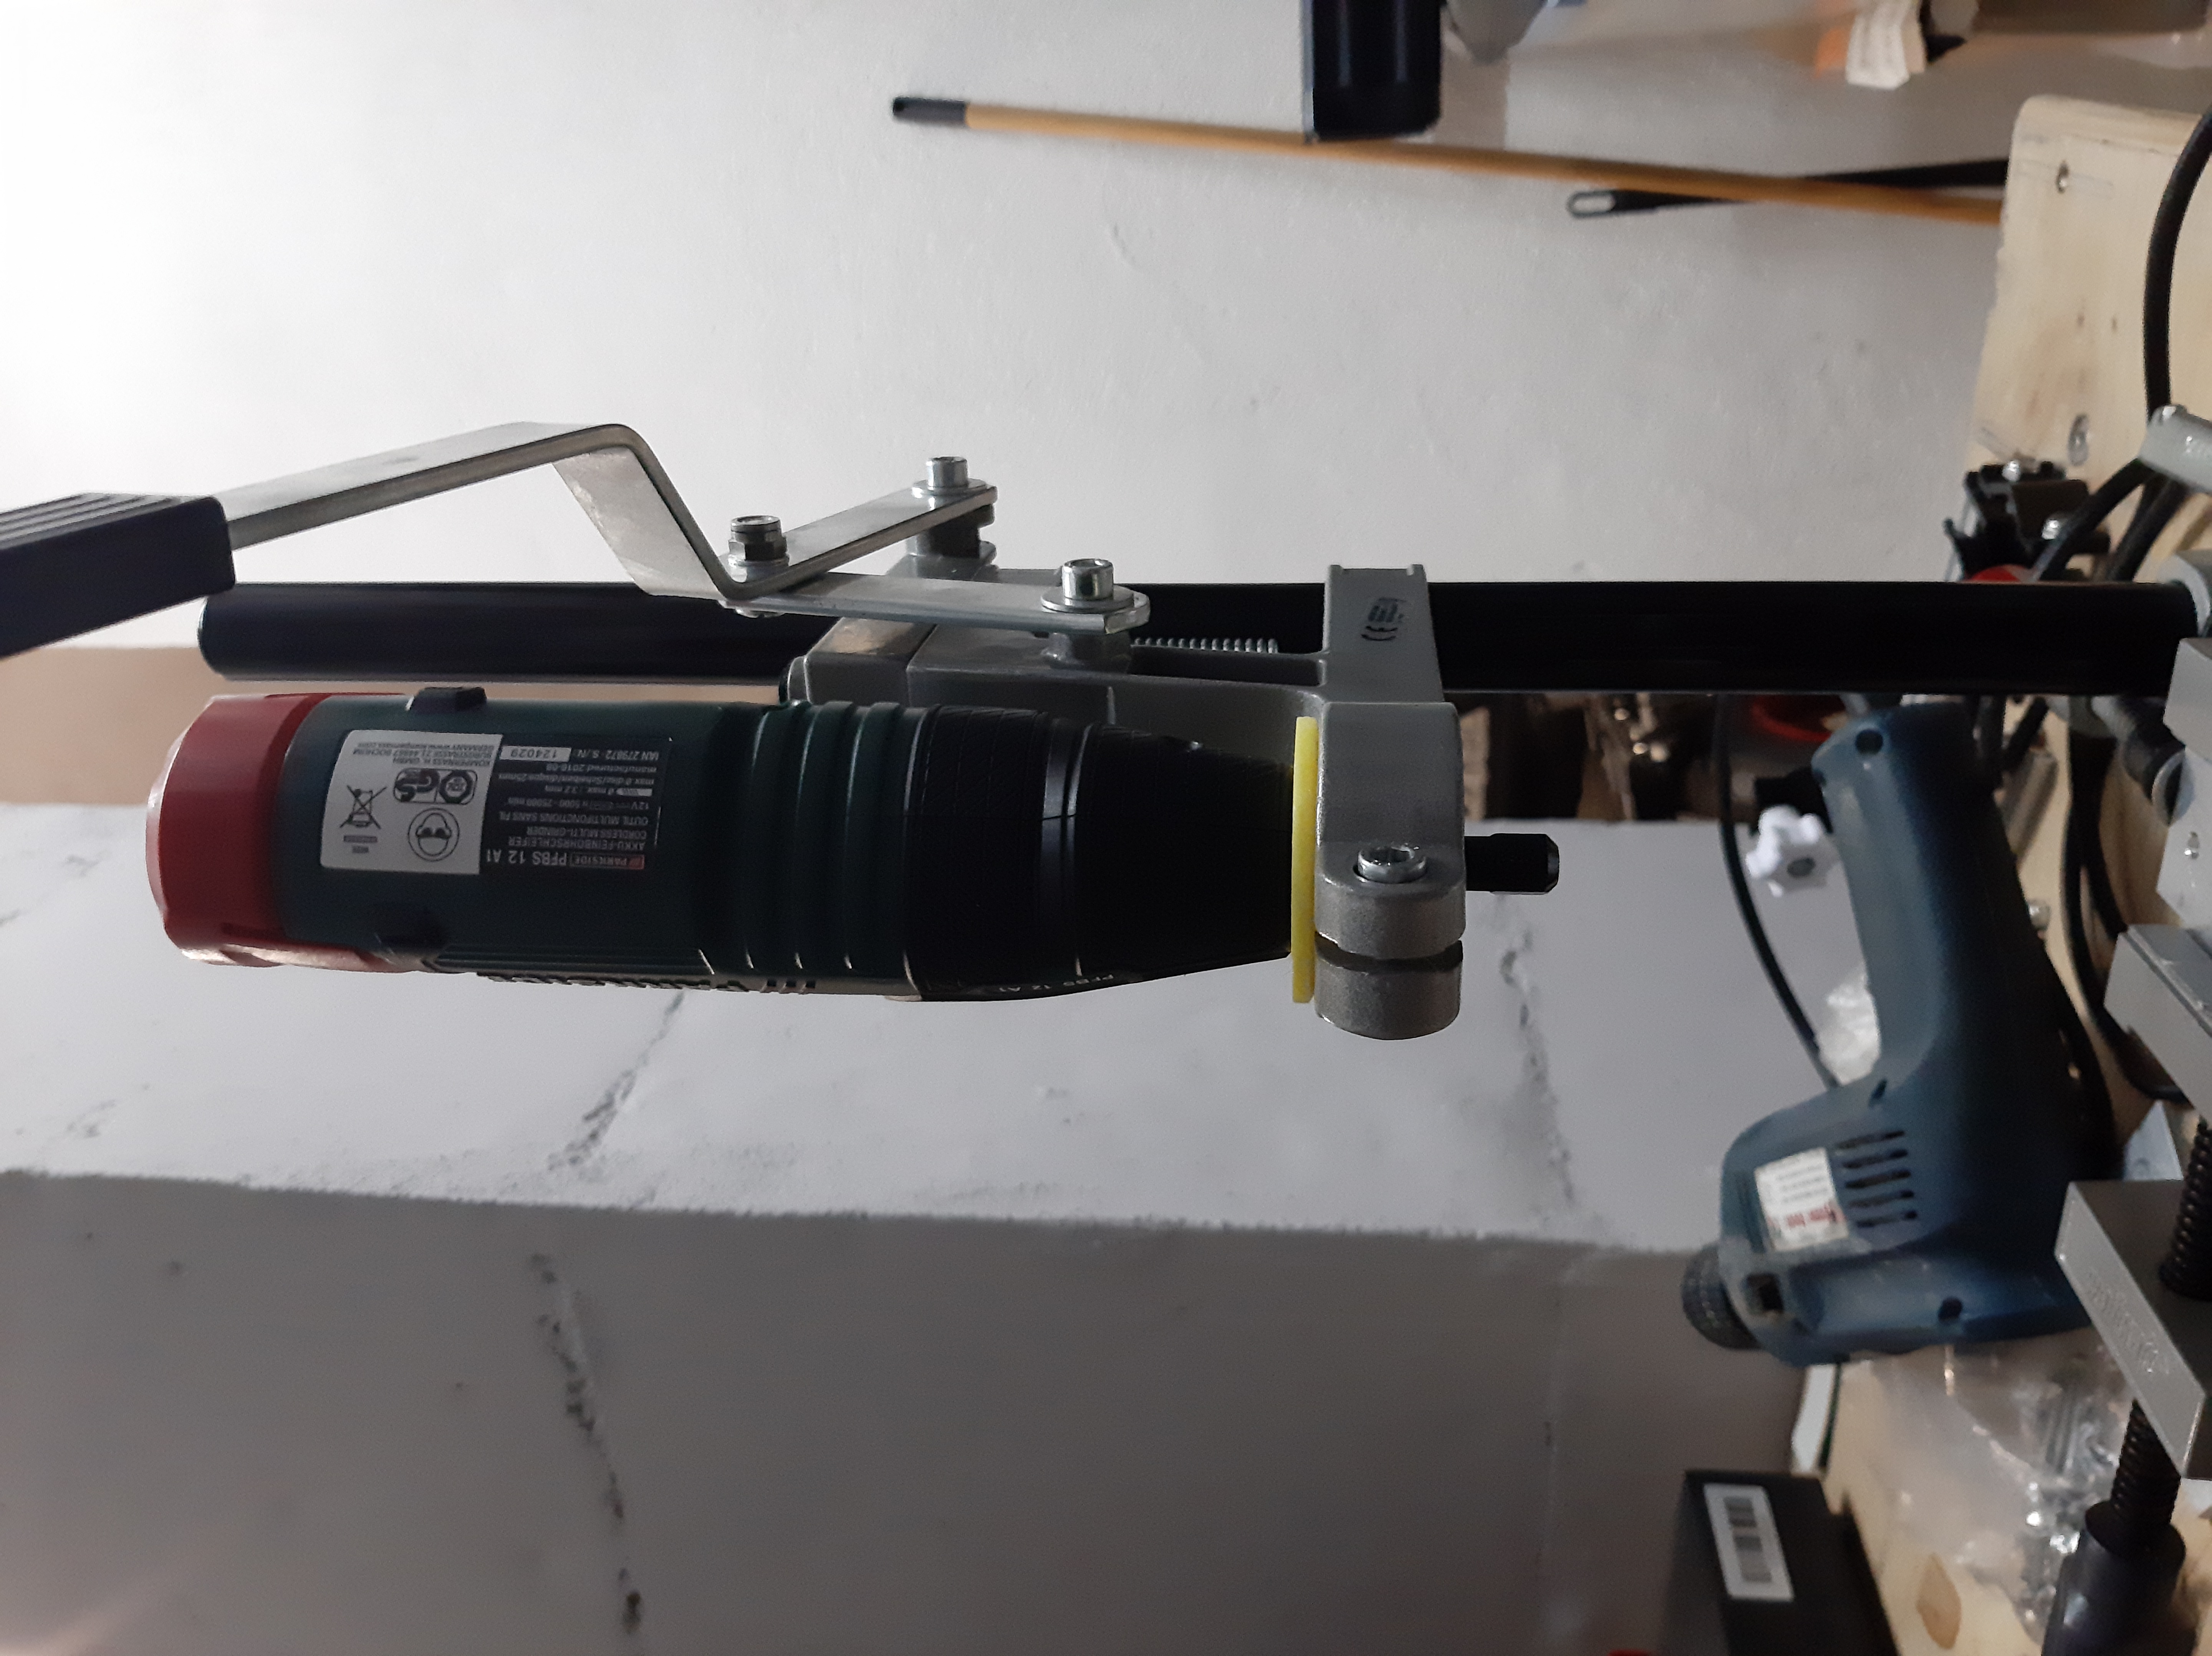 Drill press for a Dremel by mitchnajmitch - Thingiverse